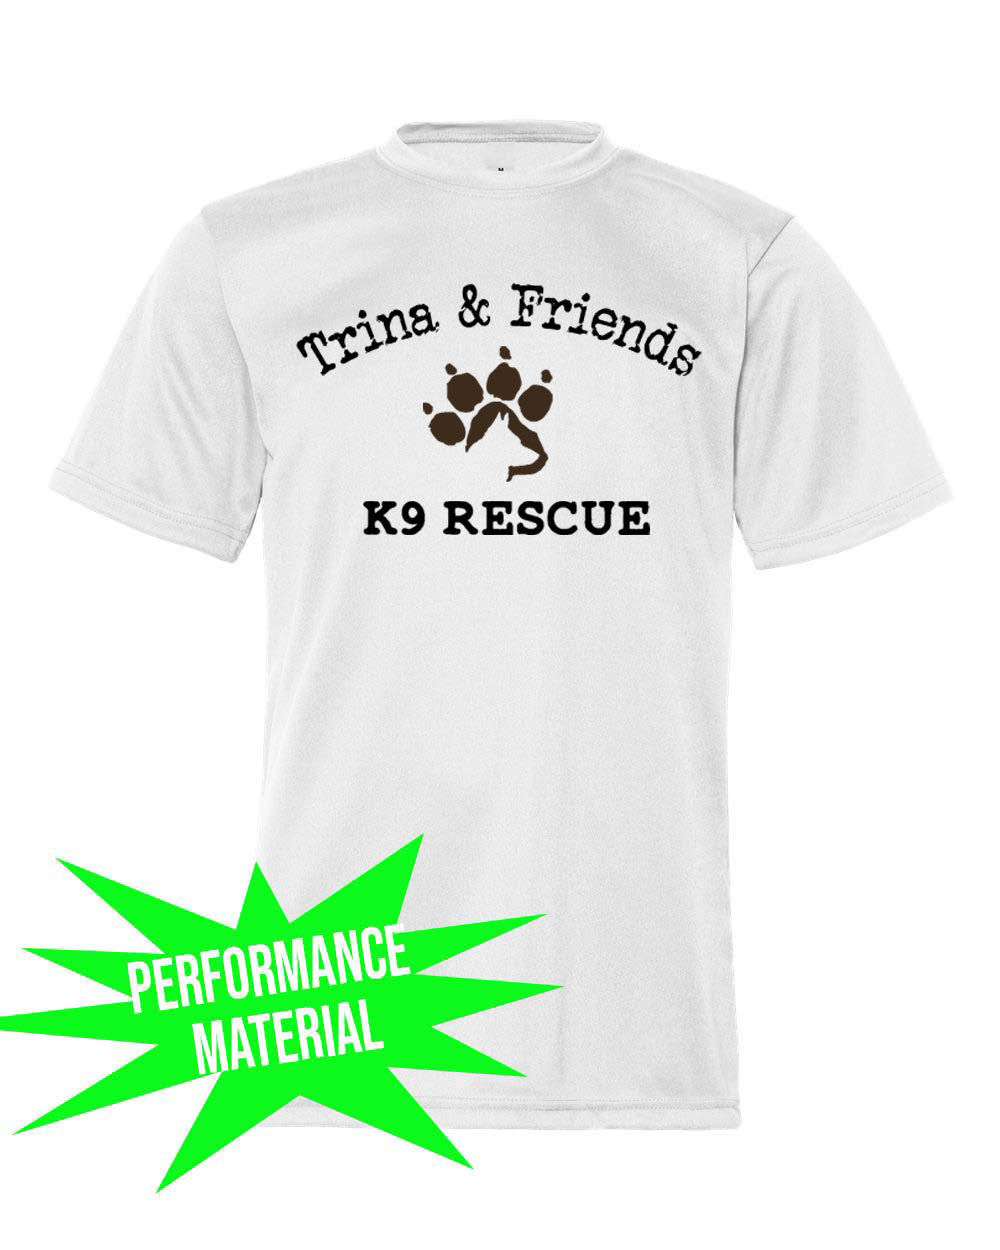 Trina & Friends Performance Material design 6 T-Shirt